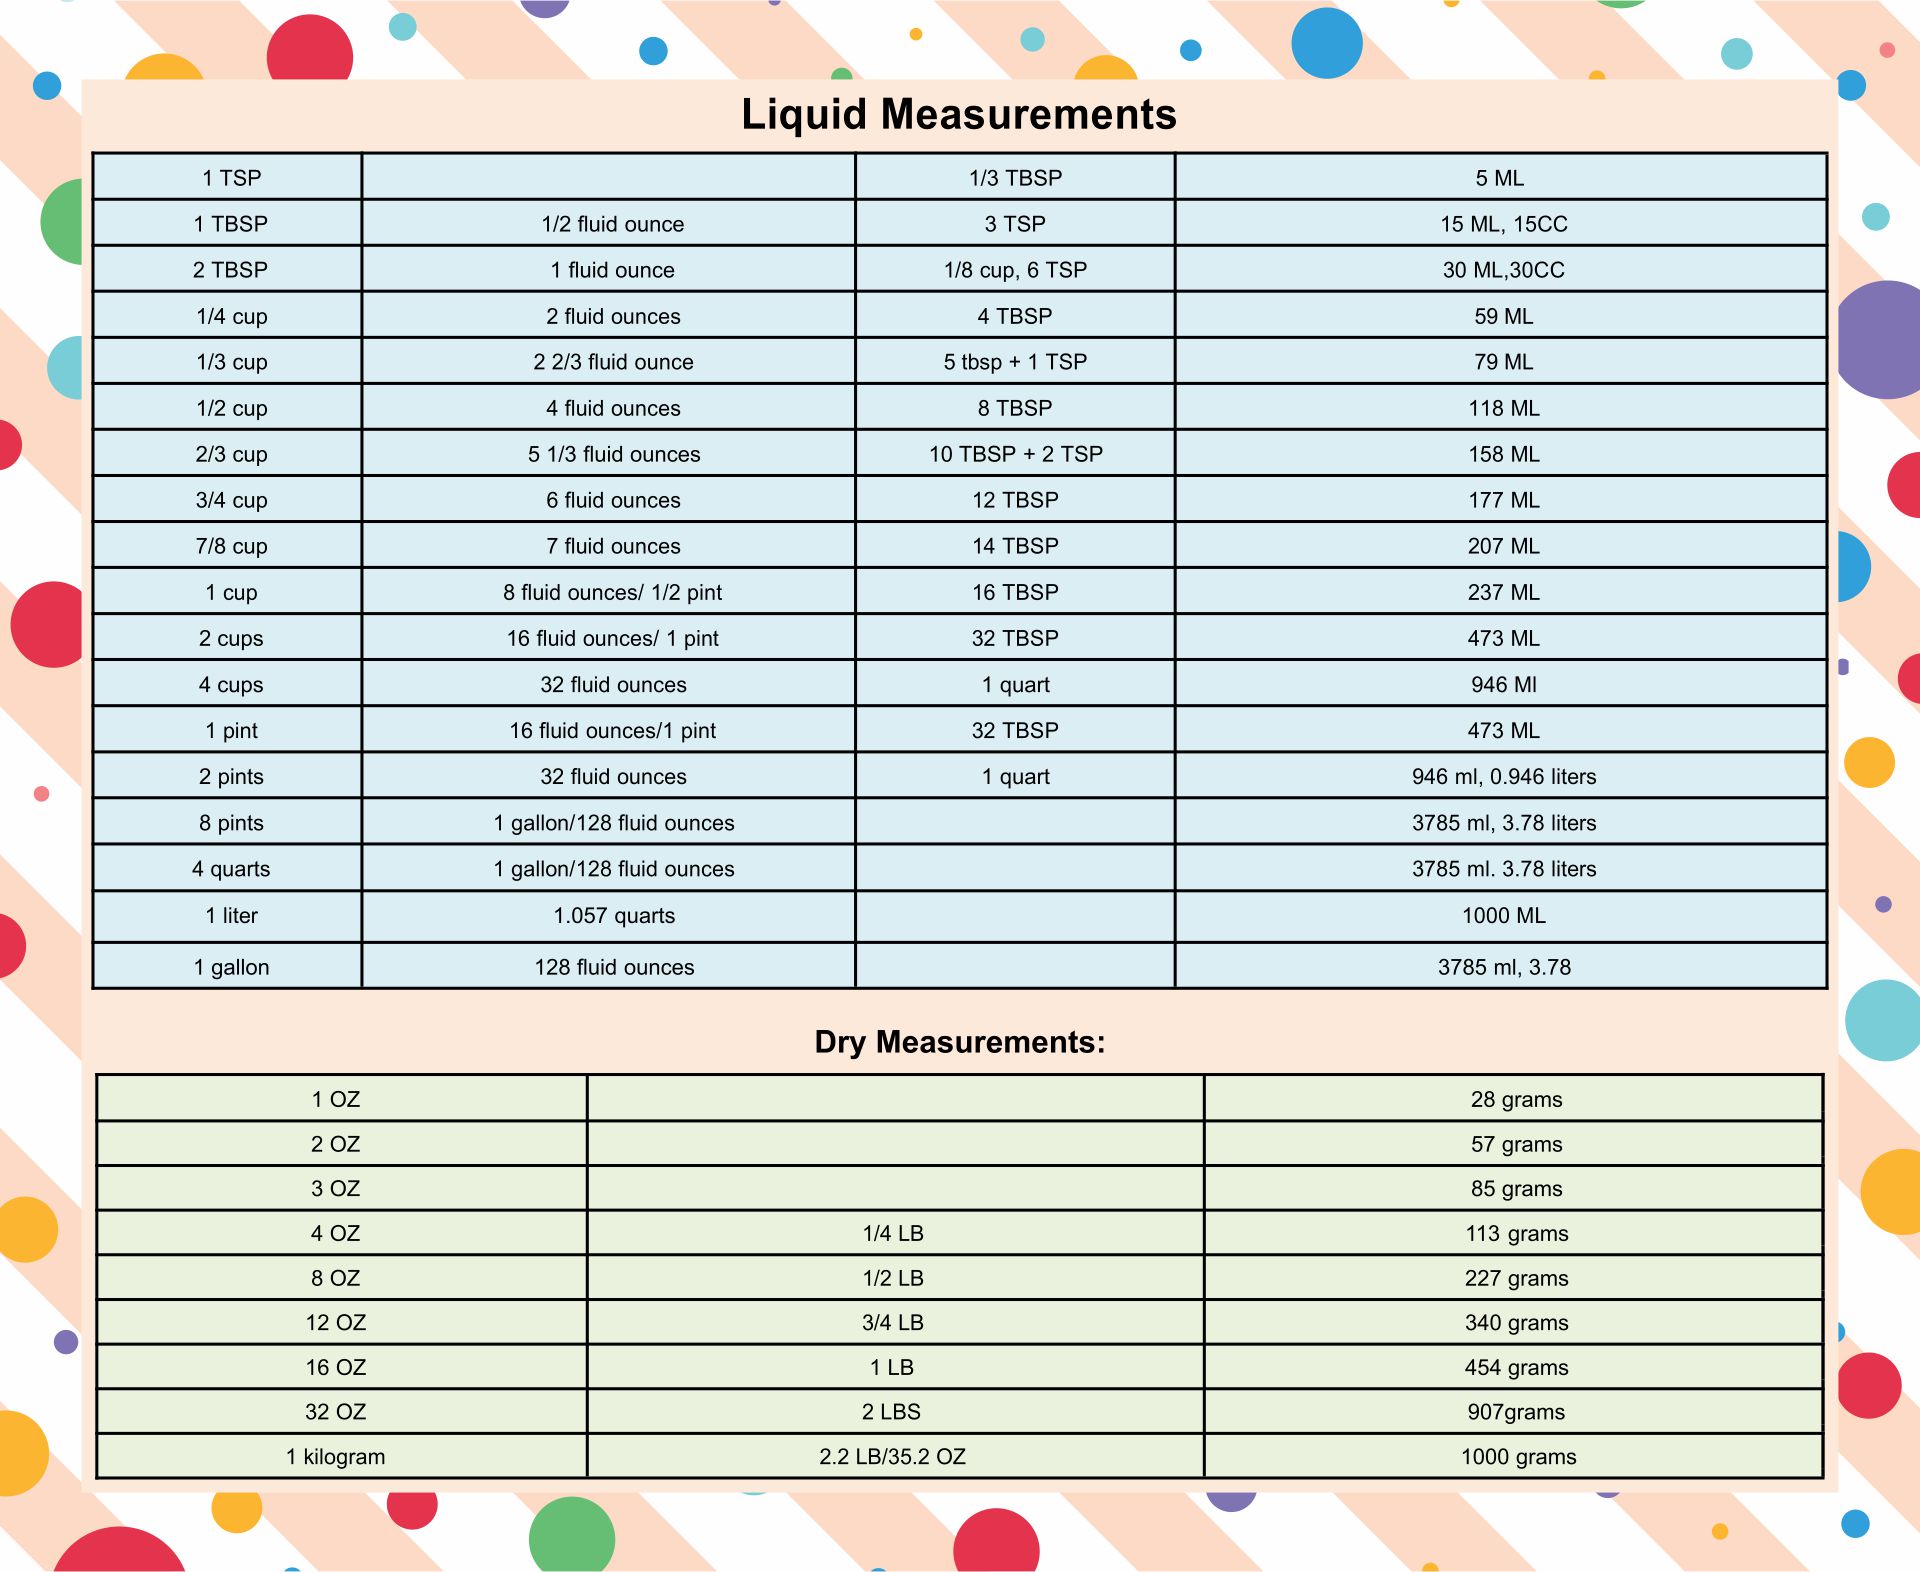 units of liquid measurements